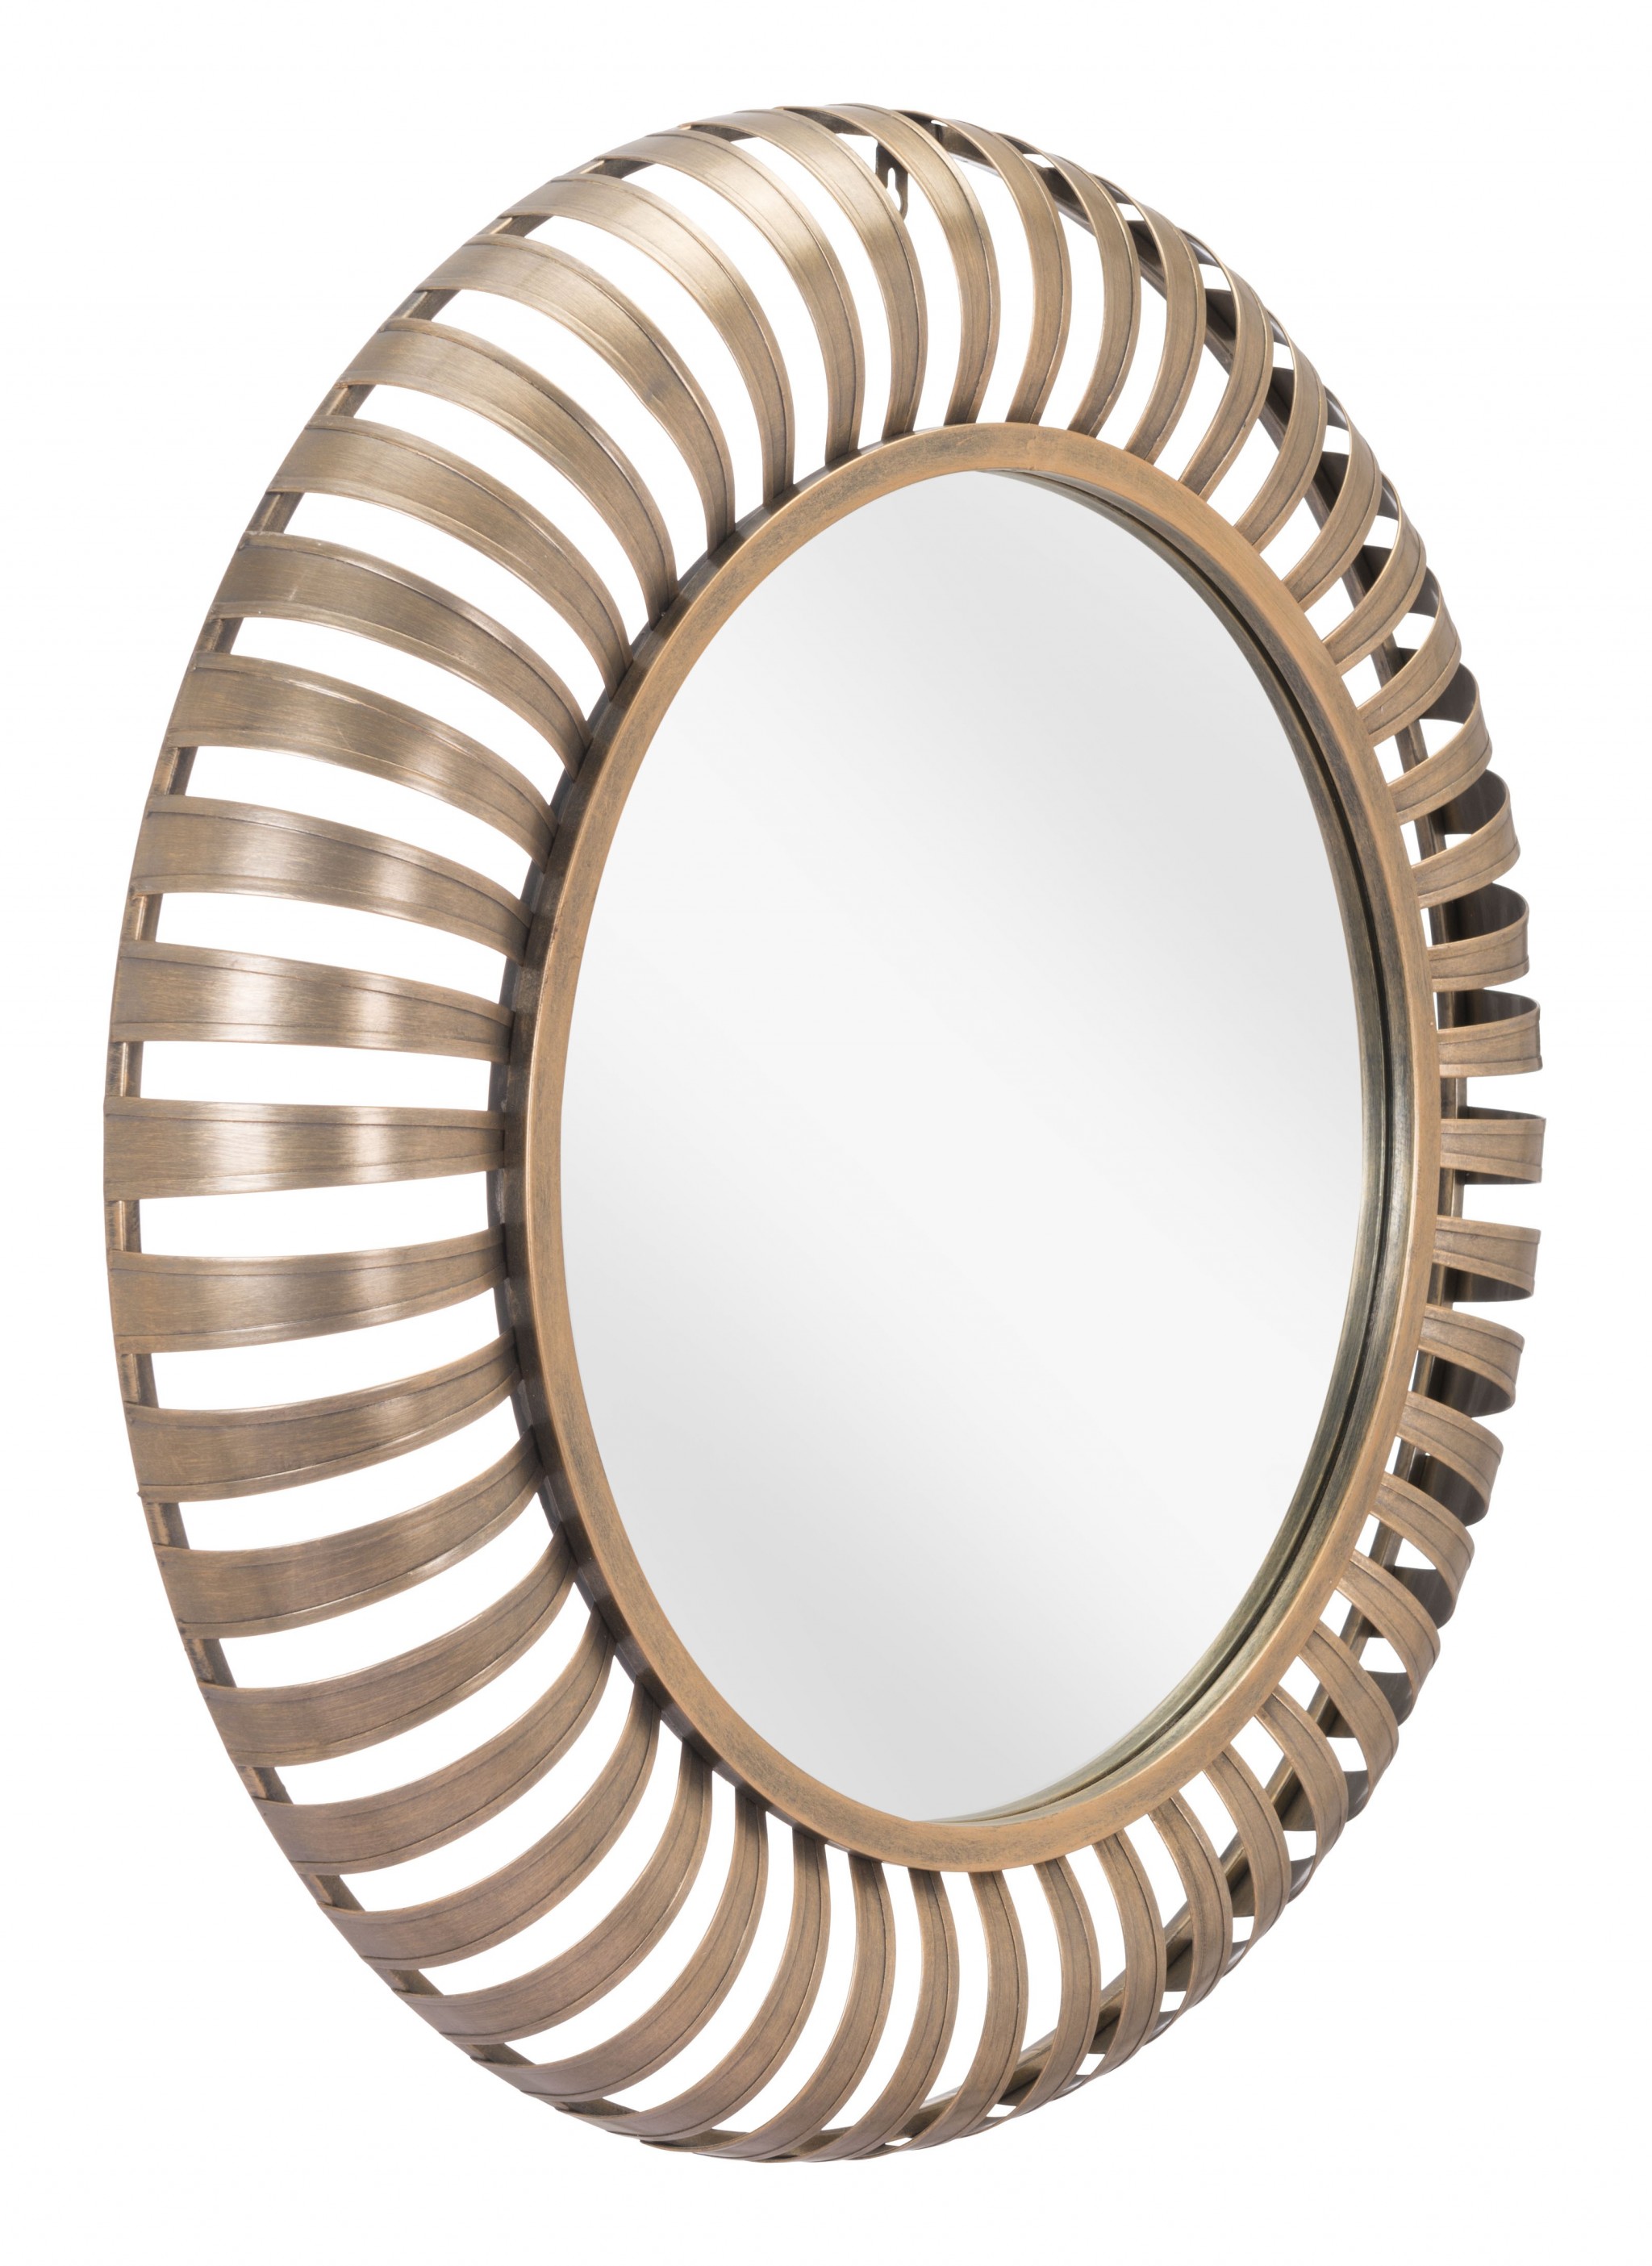 Dull Gold Striped Round Mirror